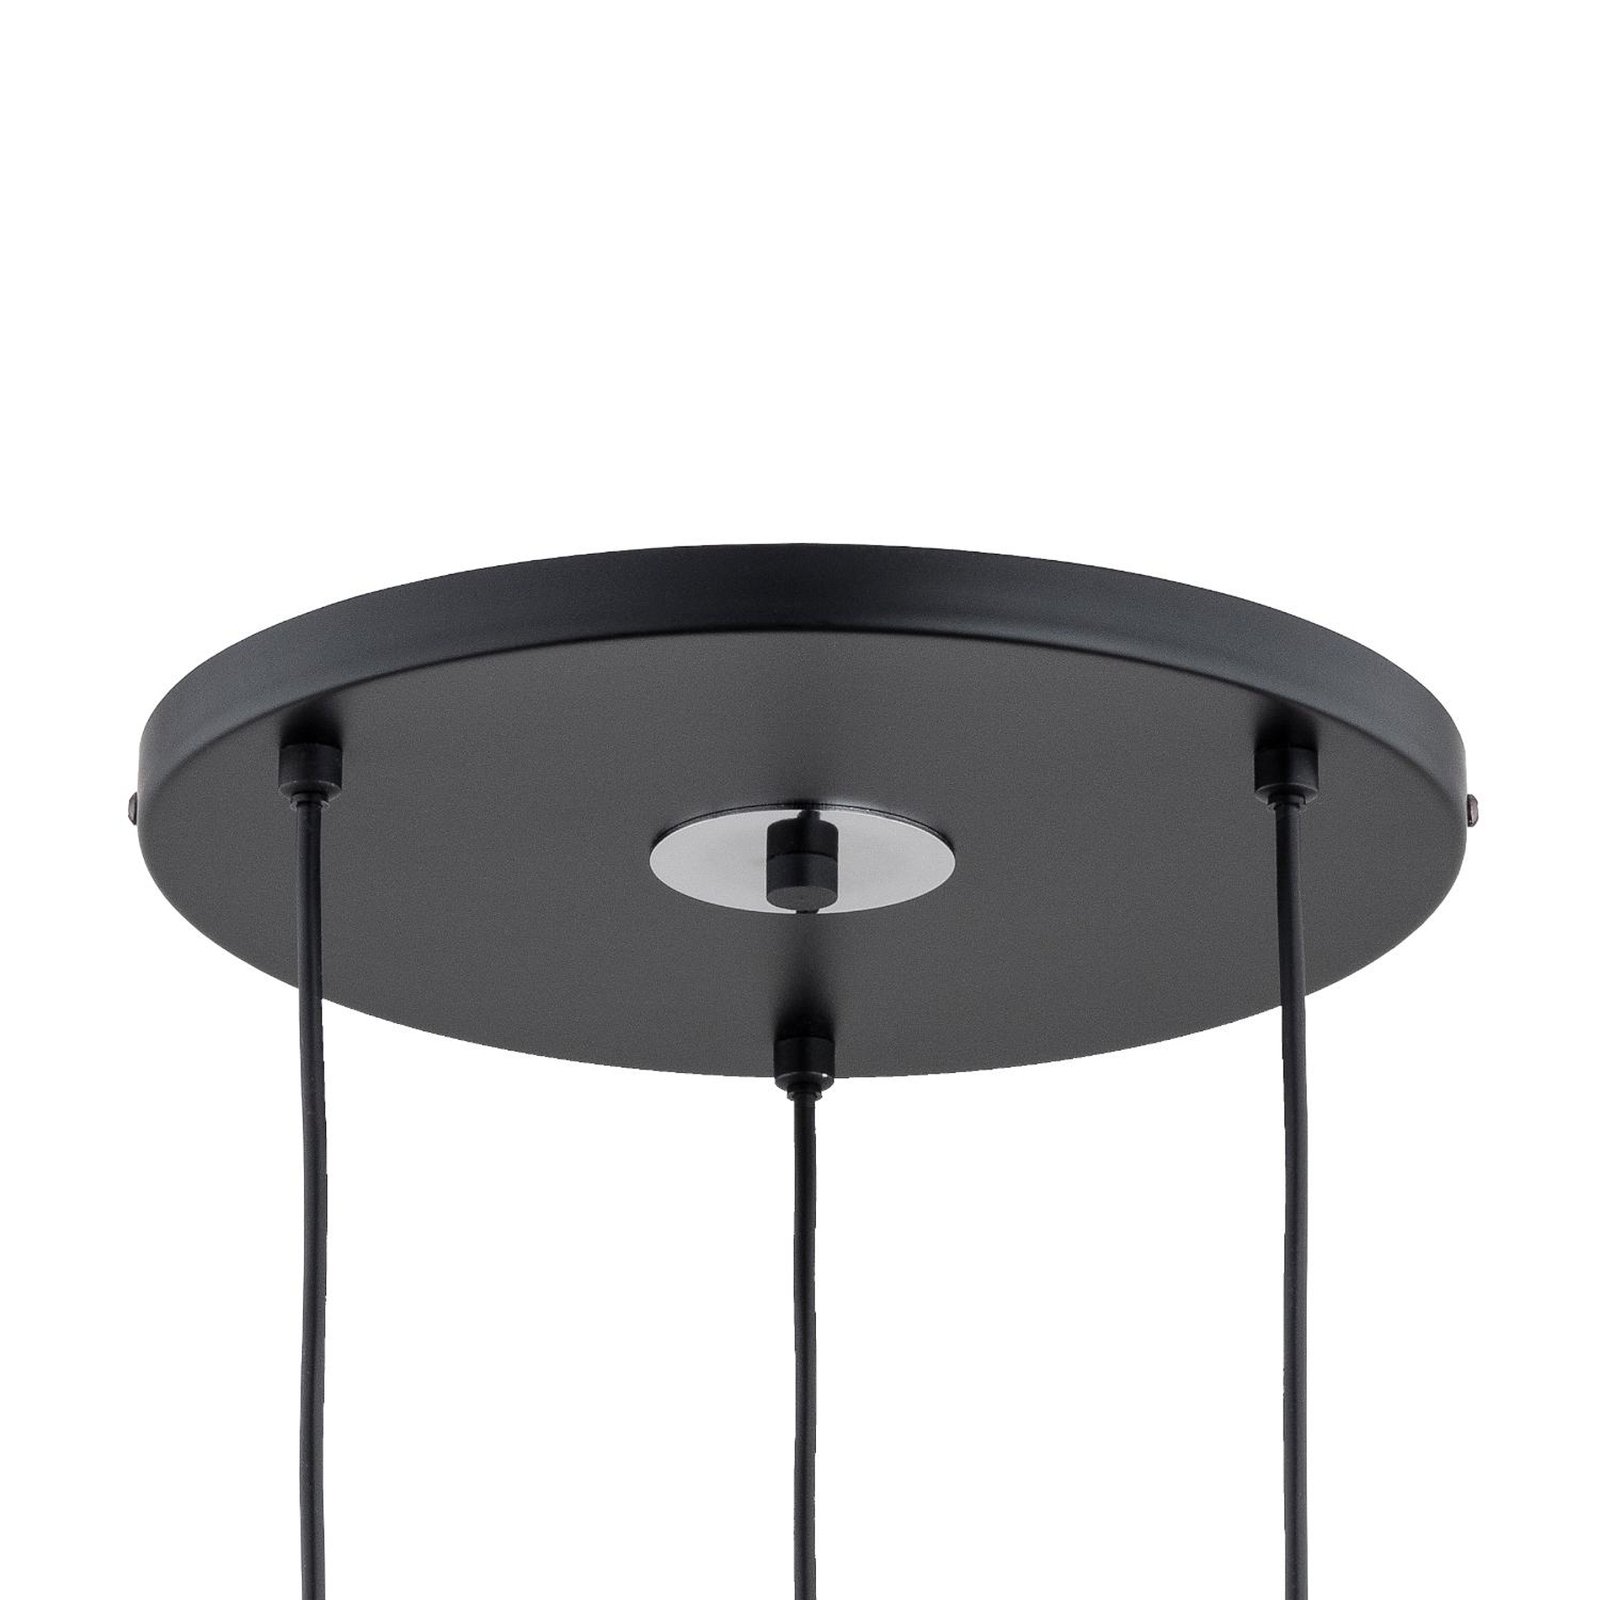 Goxa pendant light, round, 3-bulb, black, Ø 45 cm, metal